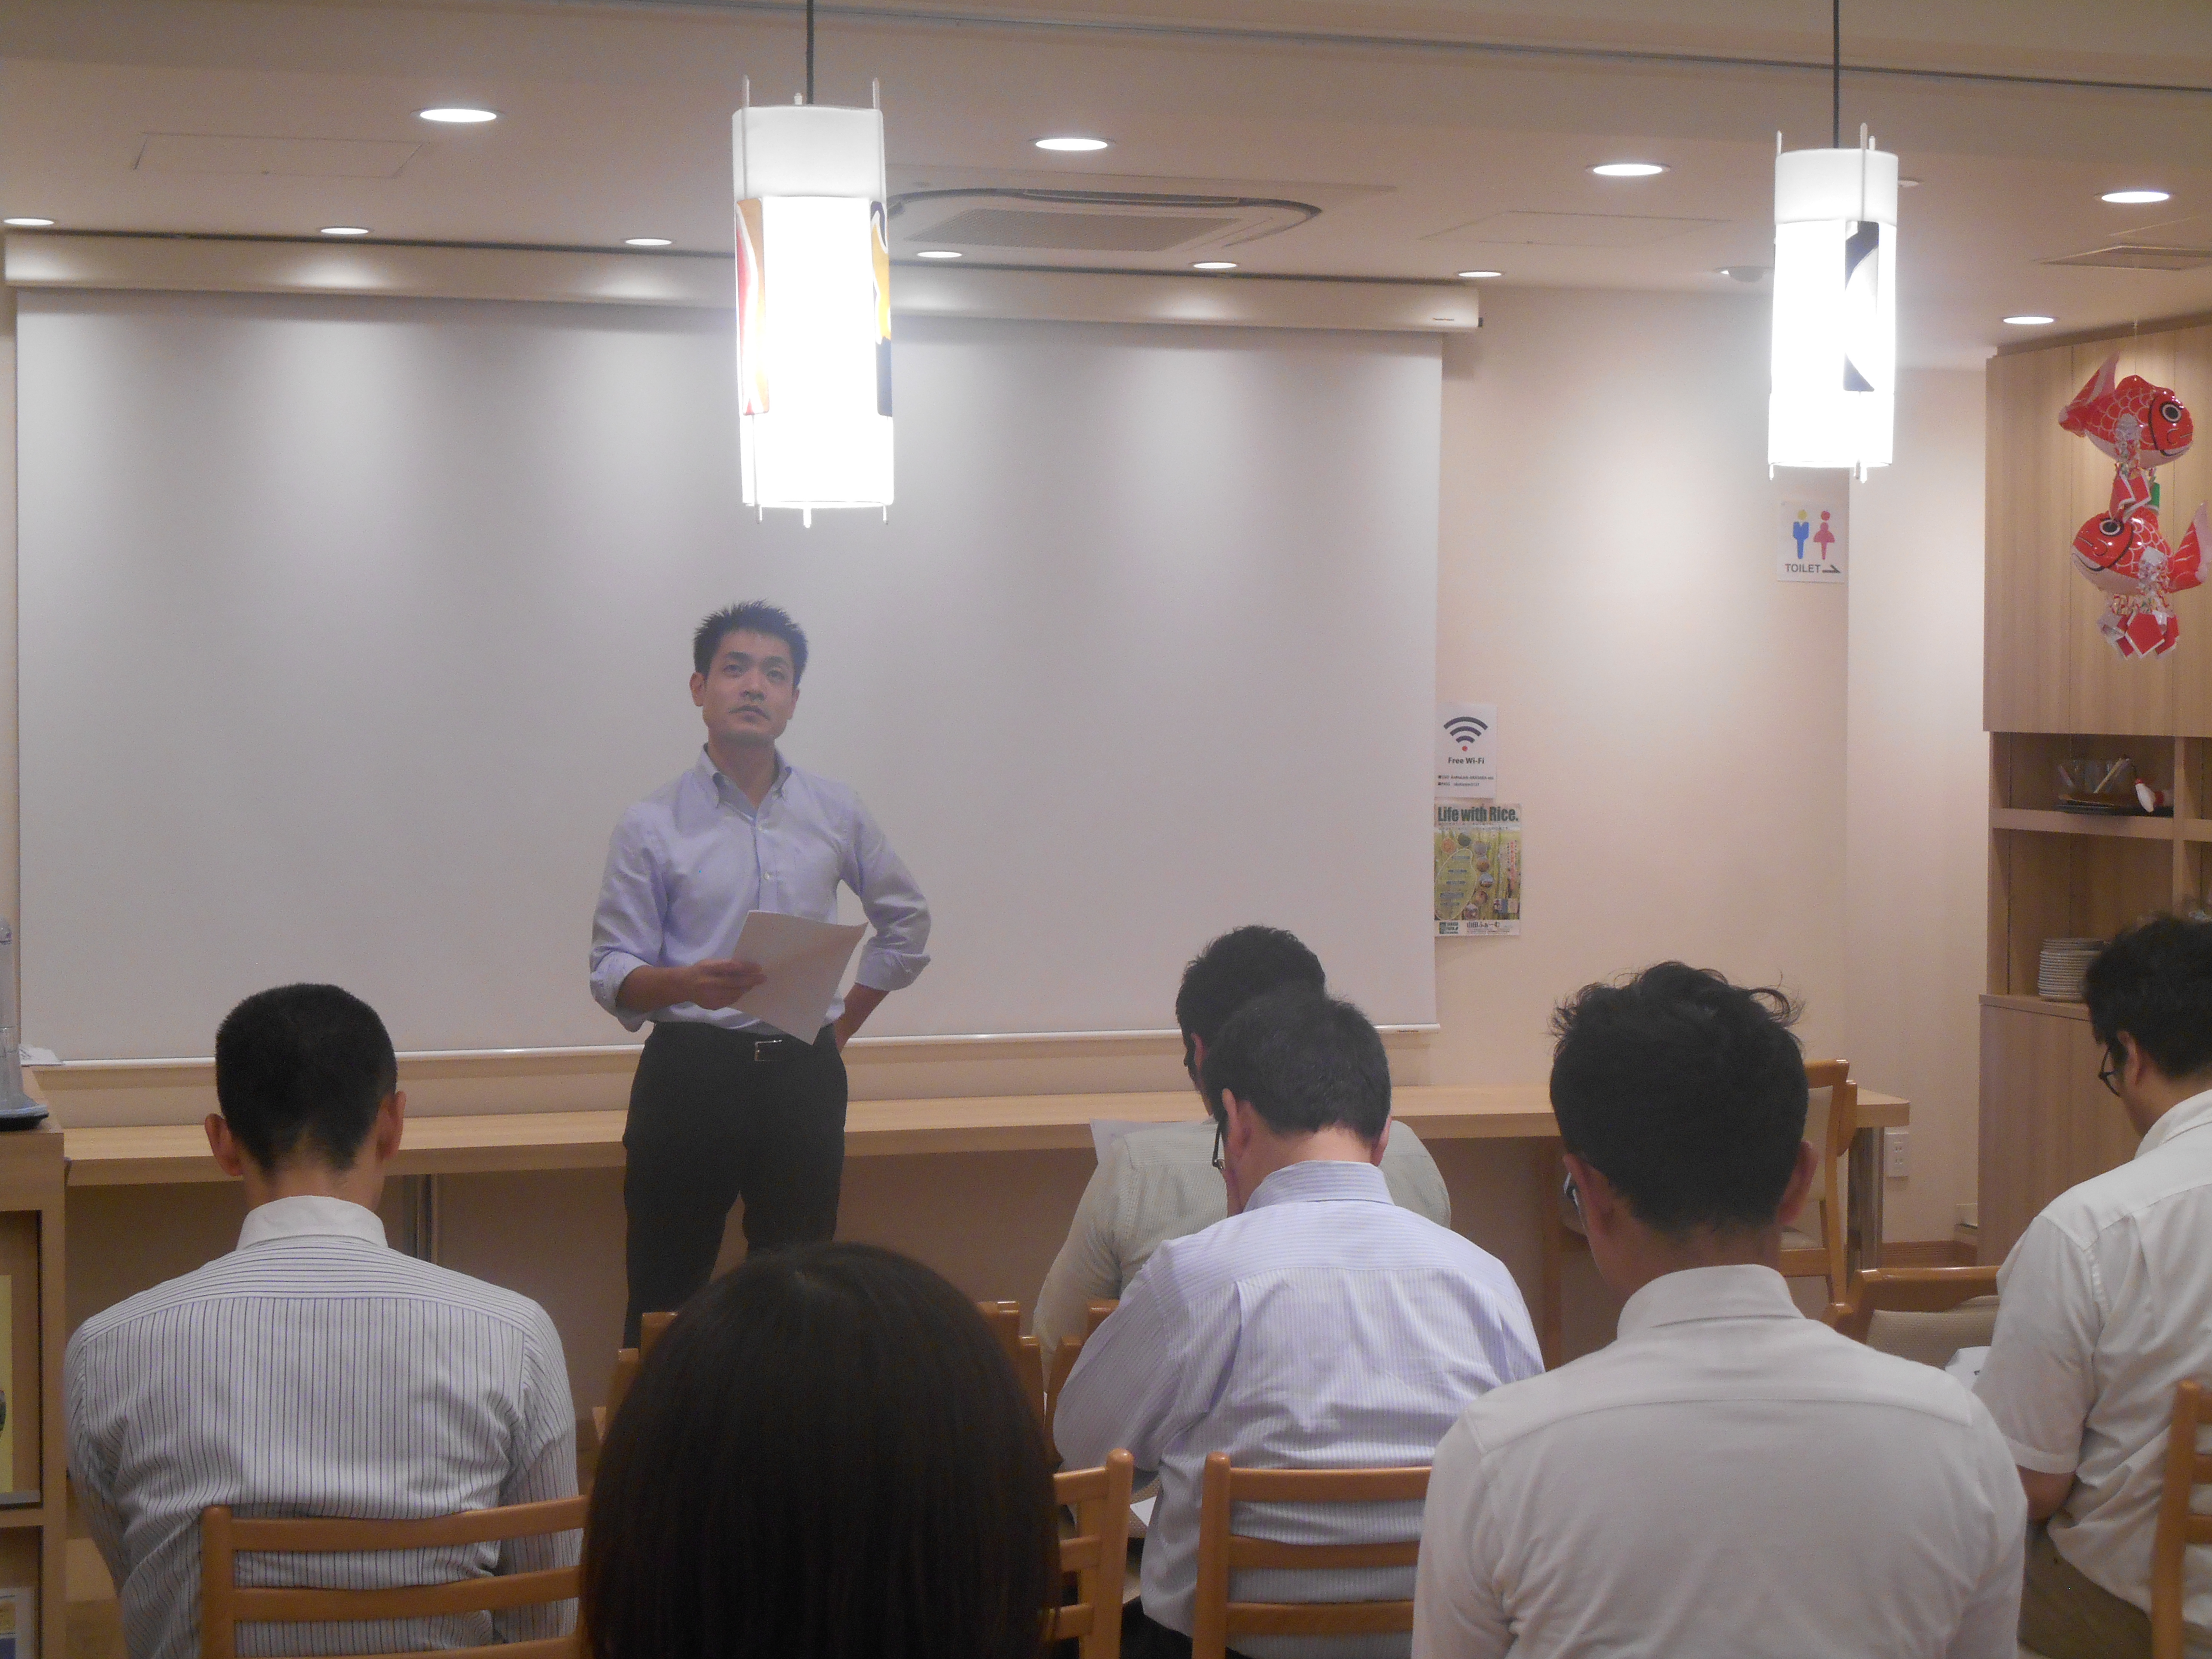 DSCN1892 - AoMoLink〜赤坂〜の第2回勉強会&交流会開催します。